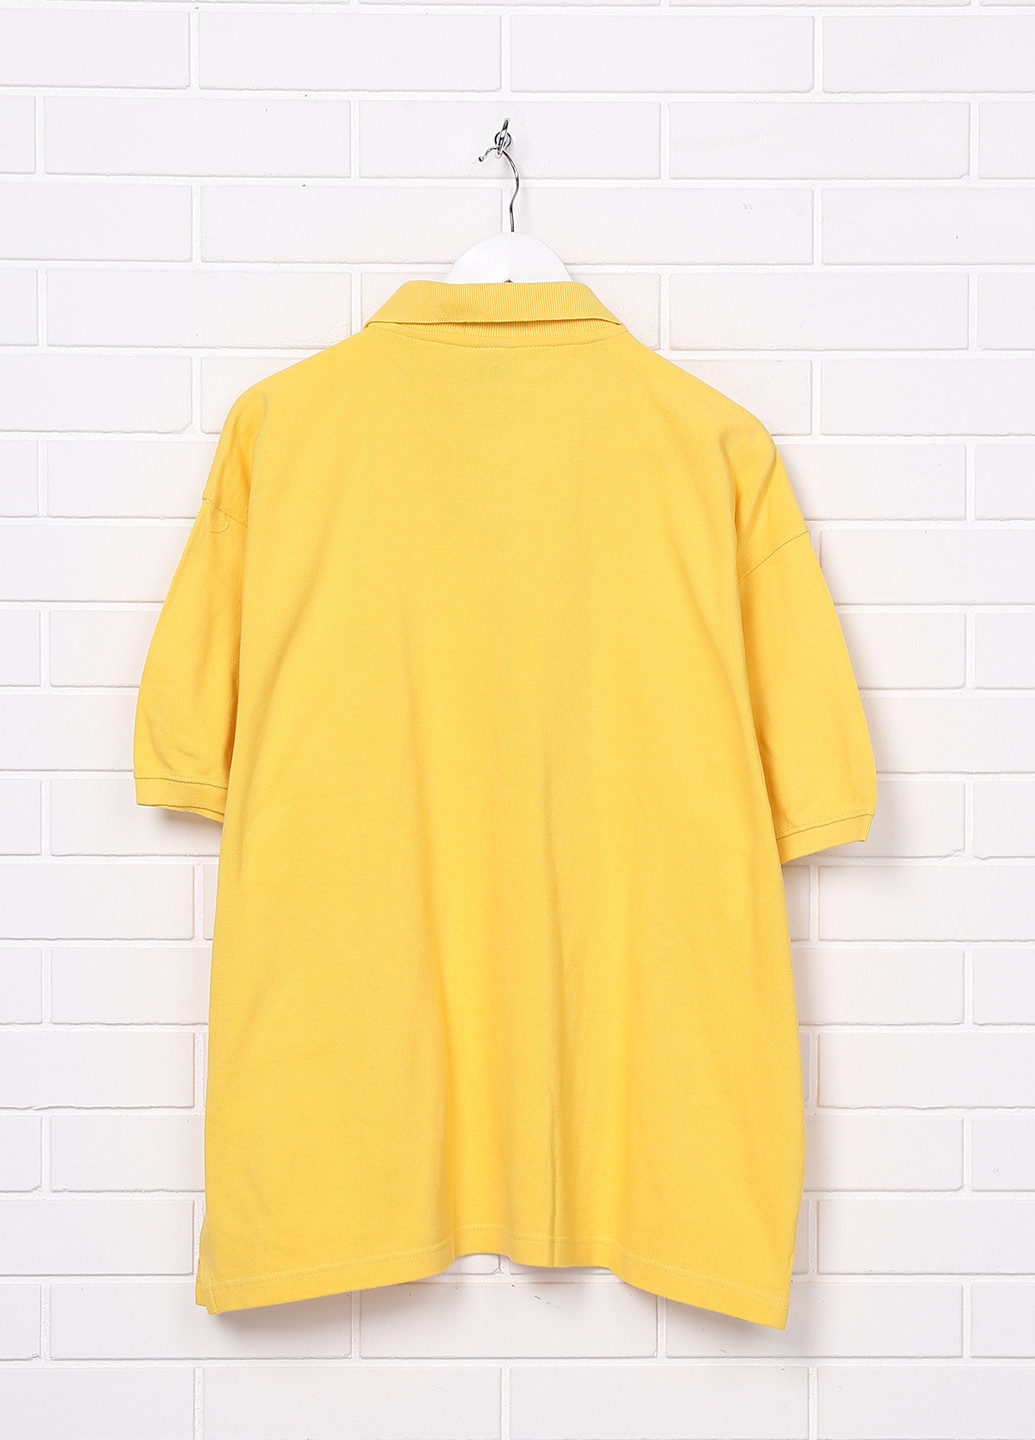 Желтая футболка-поло для мужчин LaLoving однотонная